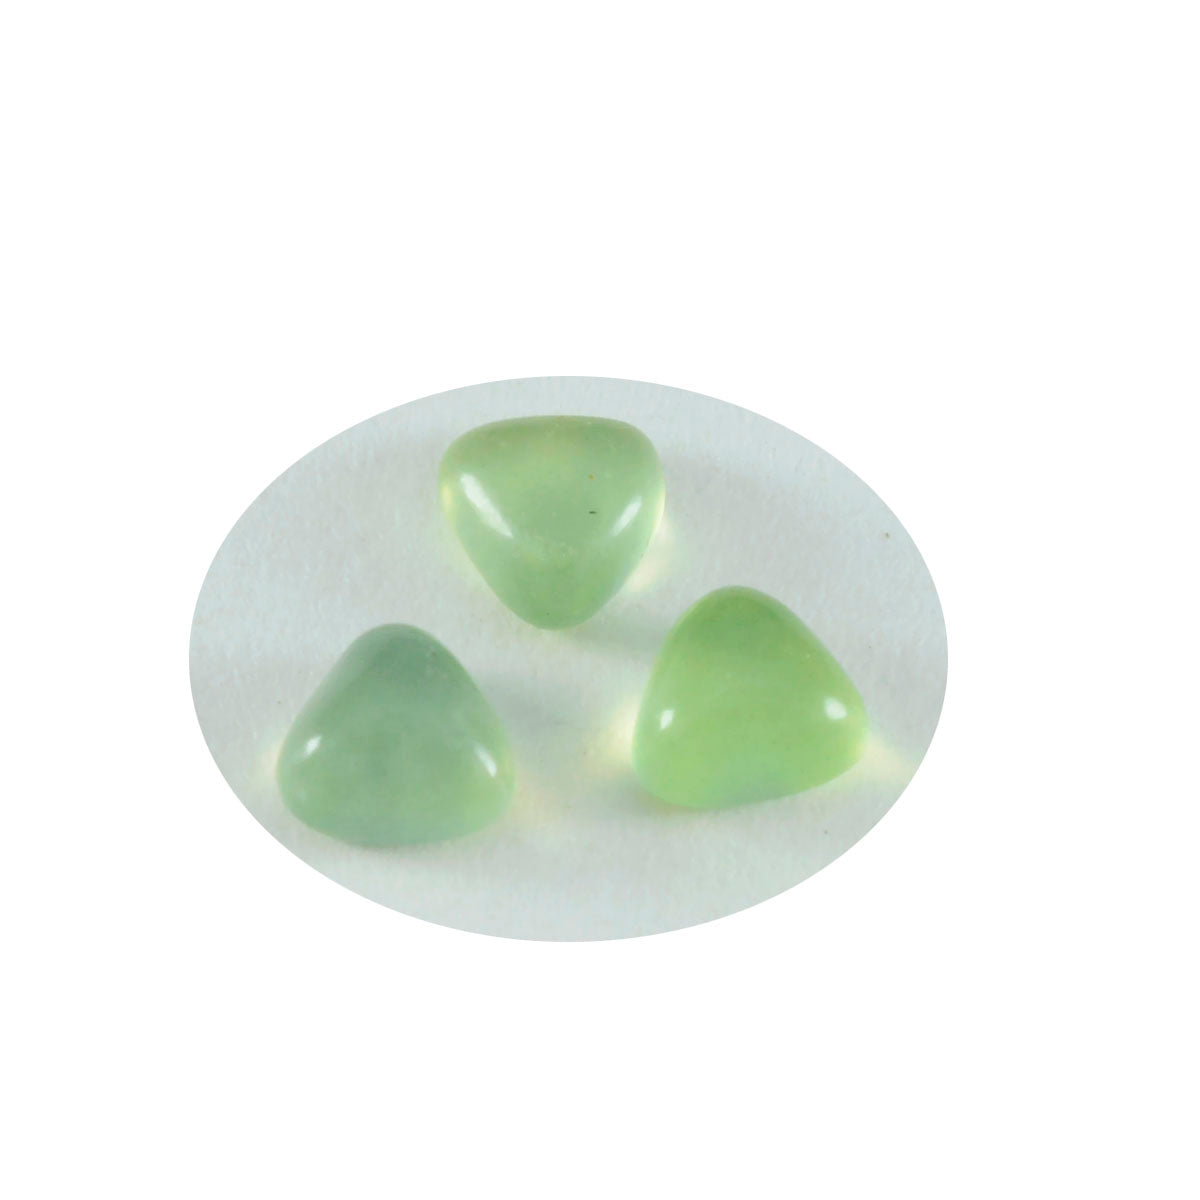 Riyogems 1PC Green Prehnite Cabochon 12x12 mm Trillion Shape startling Quality Loose Gems